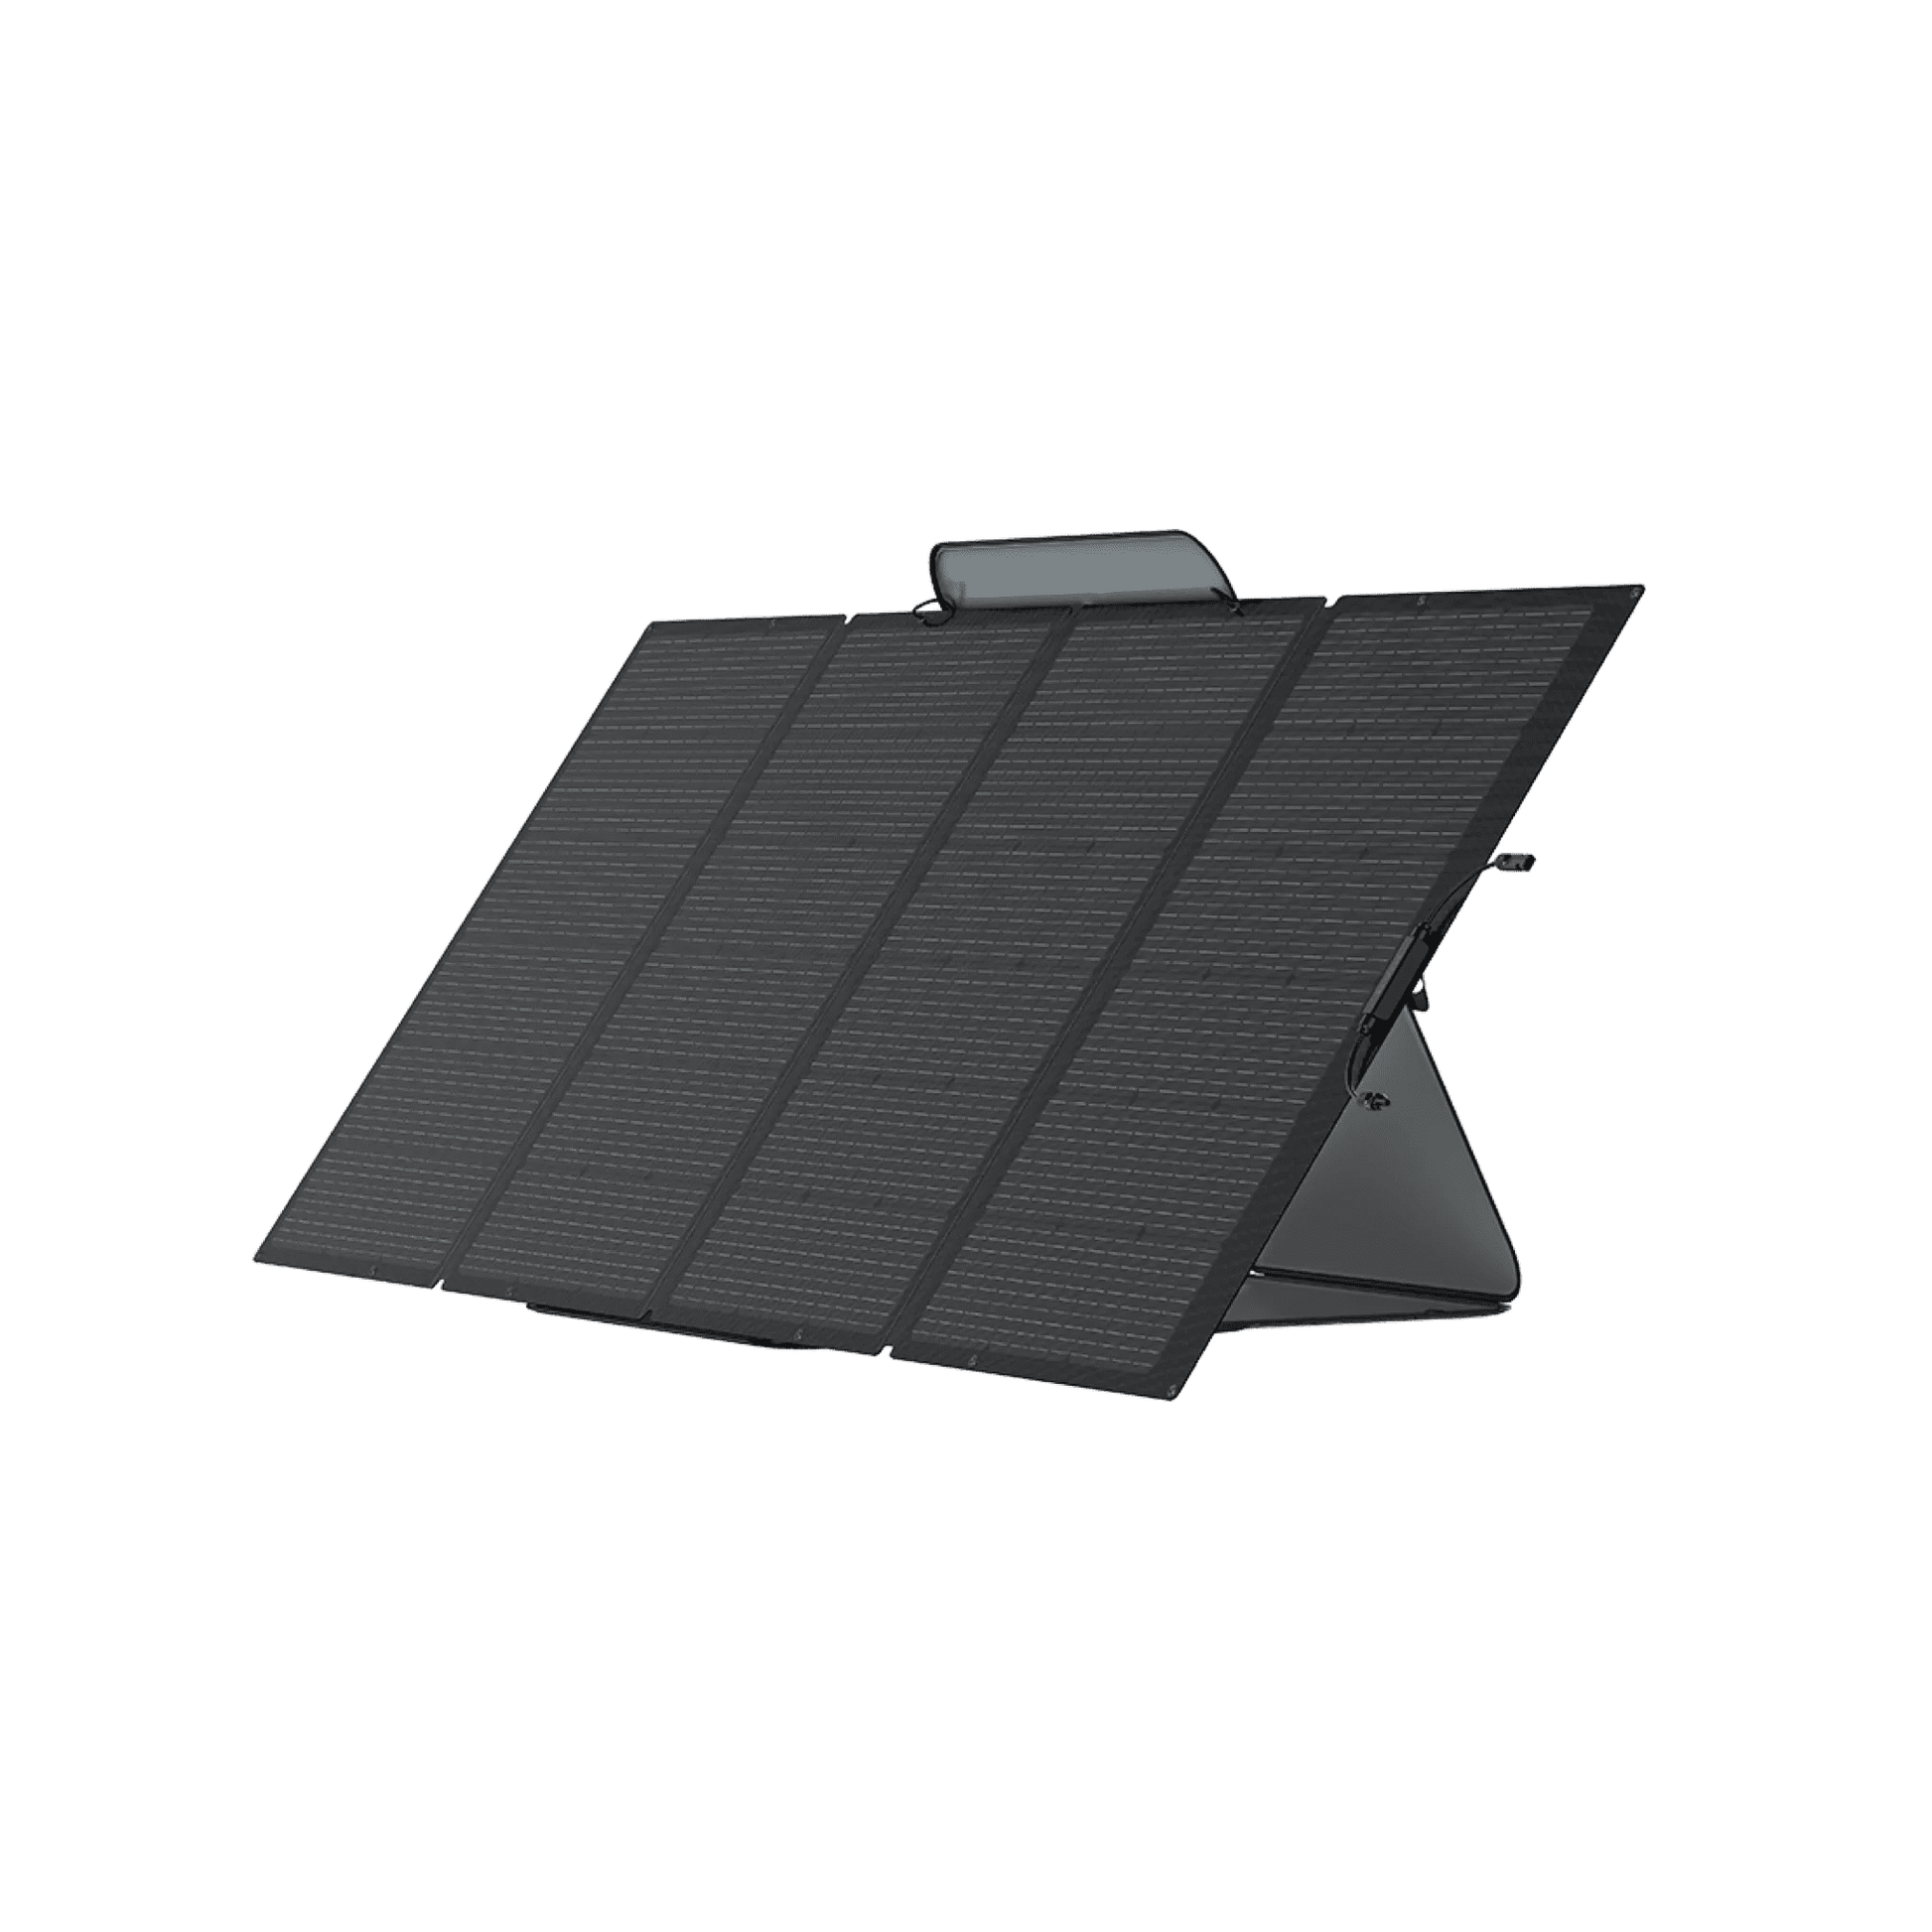 EcoFlow|DELTA PRO + Smart Extra Battery + 400W Solar Panel Bundle-EcoPowerit